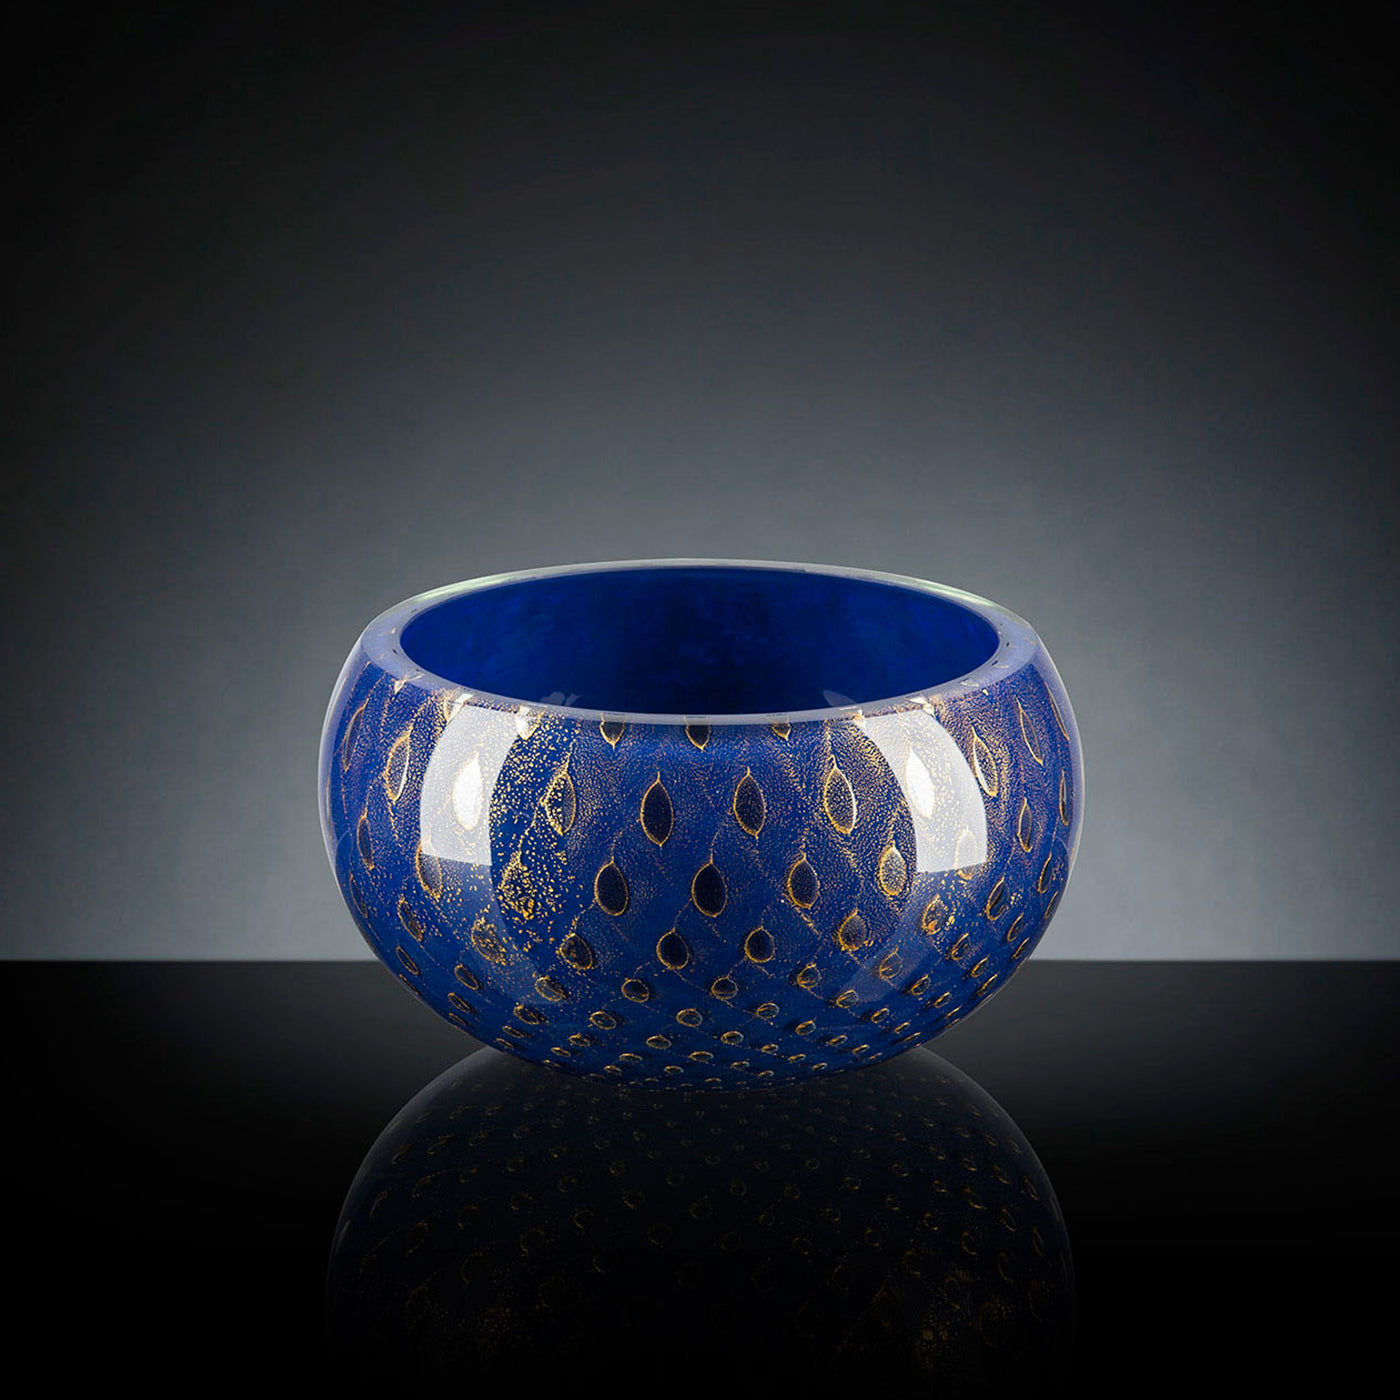 Mocenigo Gold & Blue Decorative Bowl - Alternative view 1